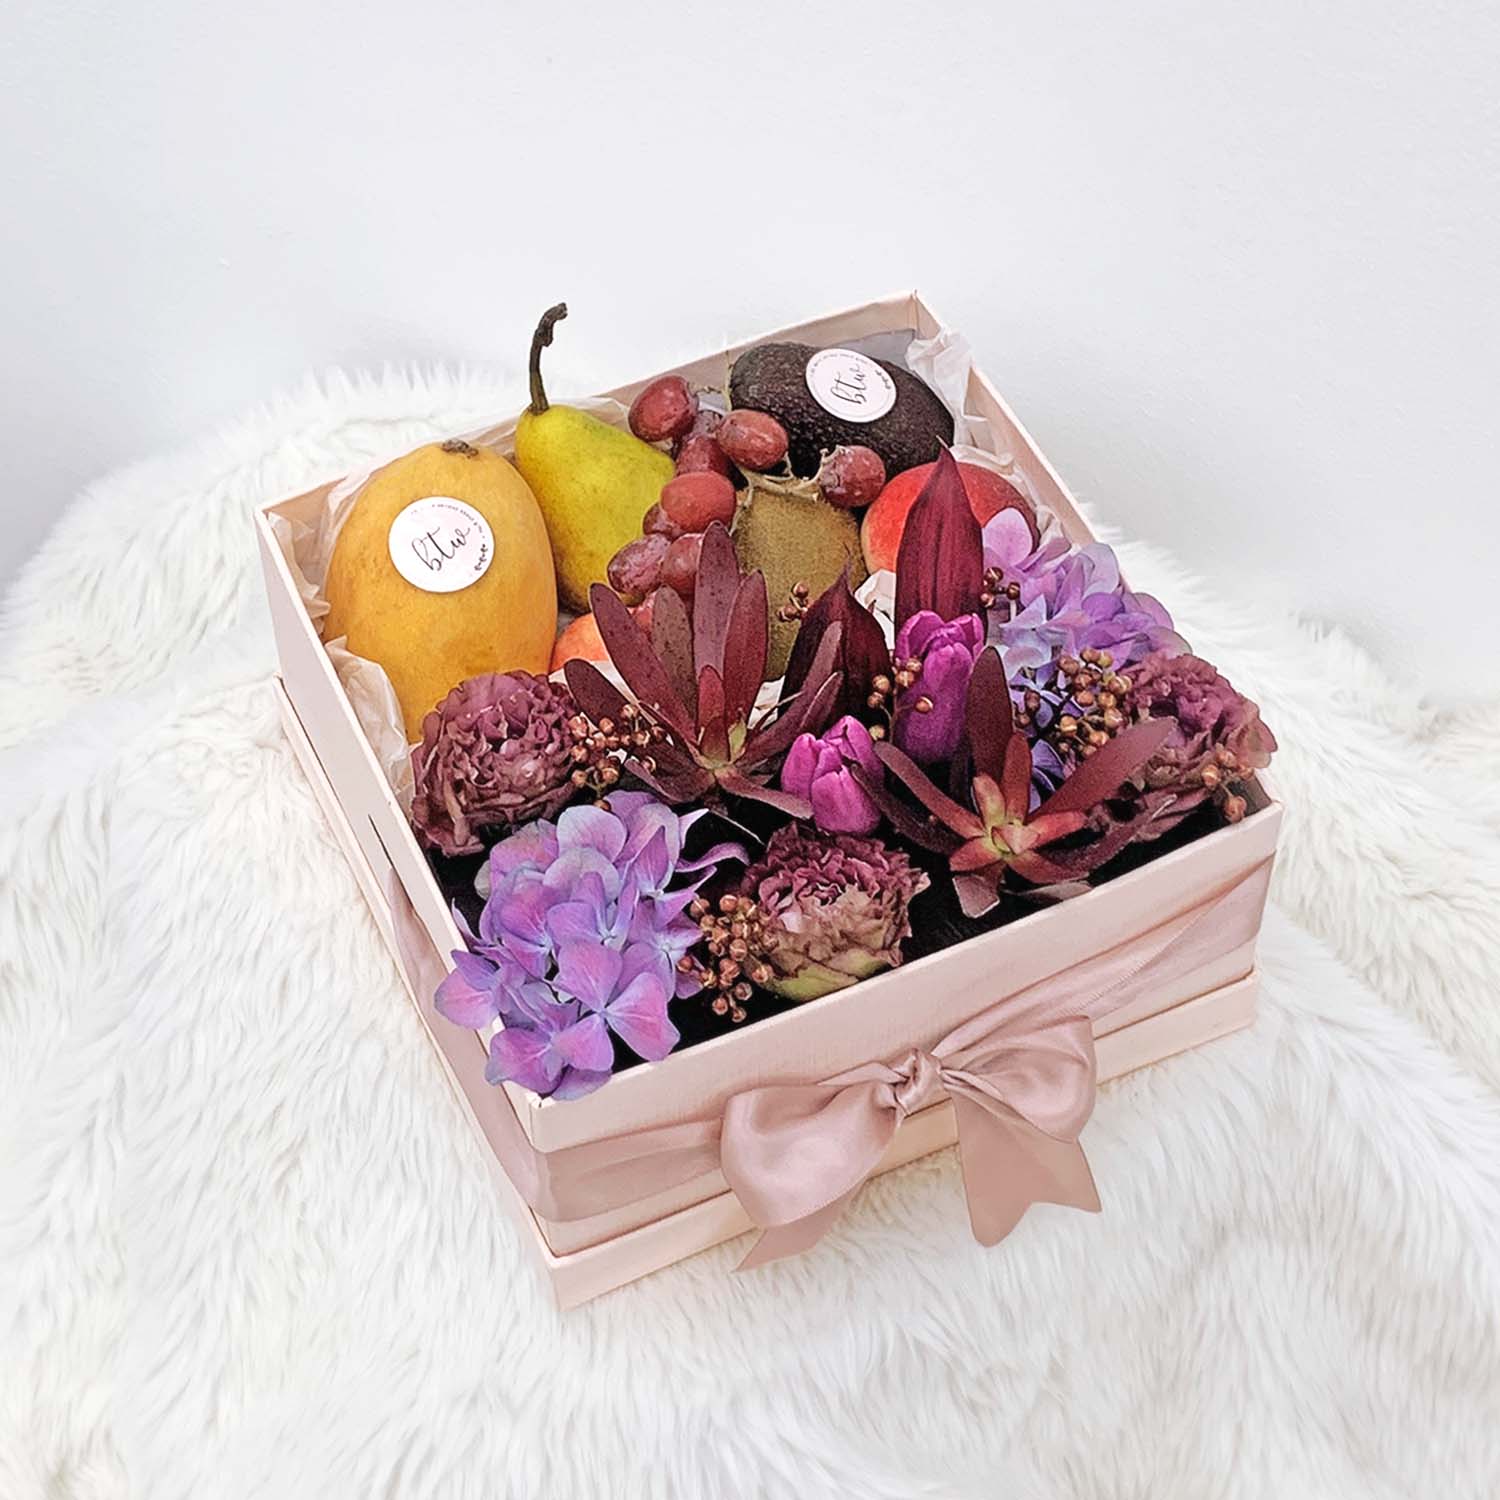 Violet Daydream Seasonal Fruits Basket